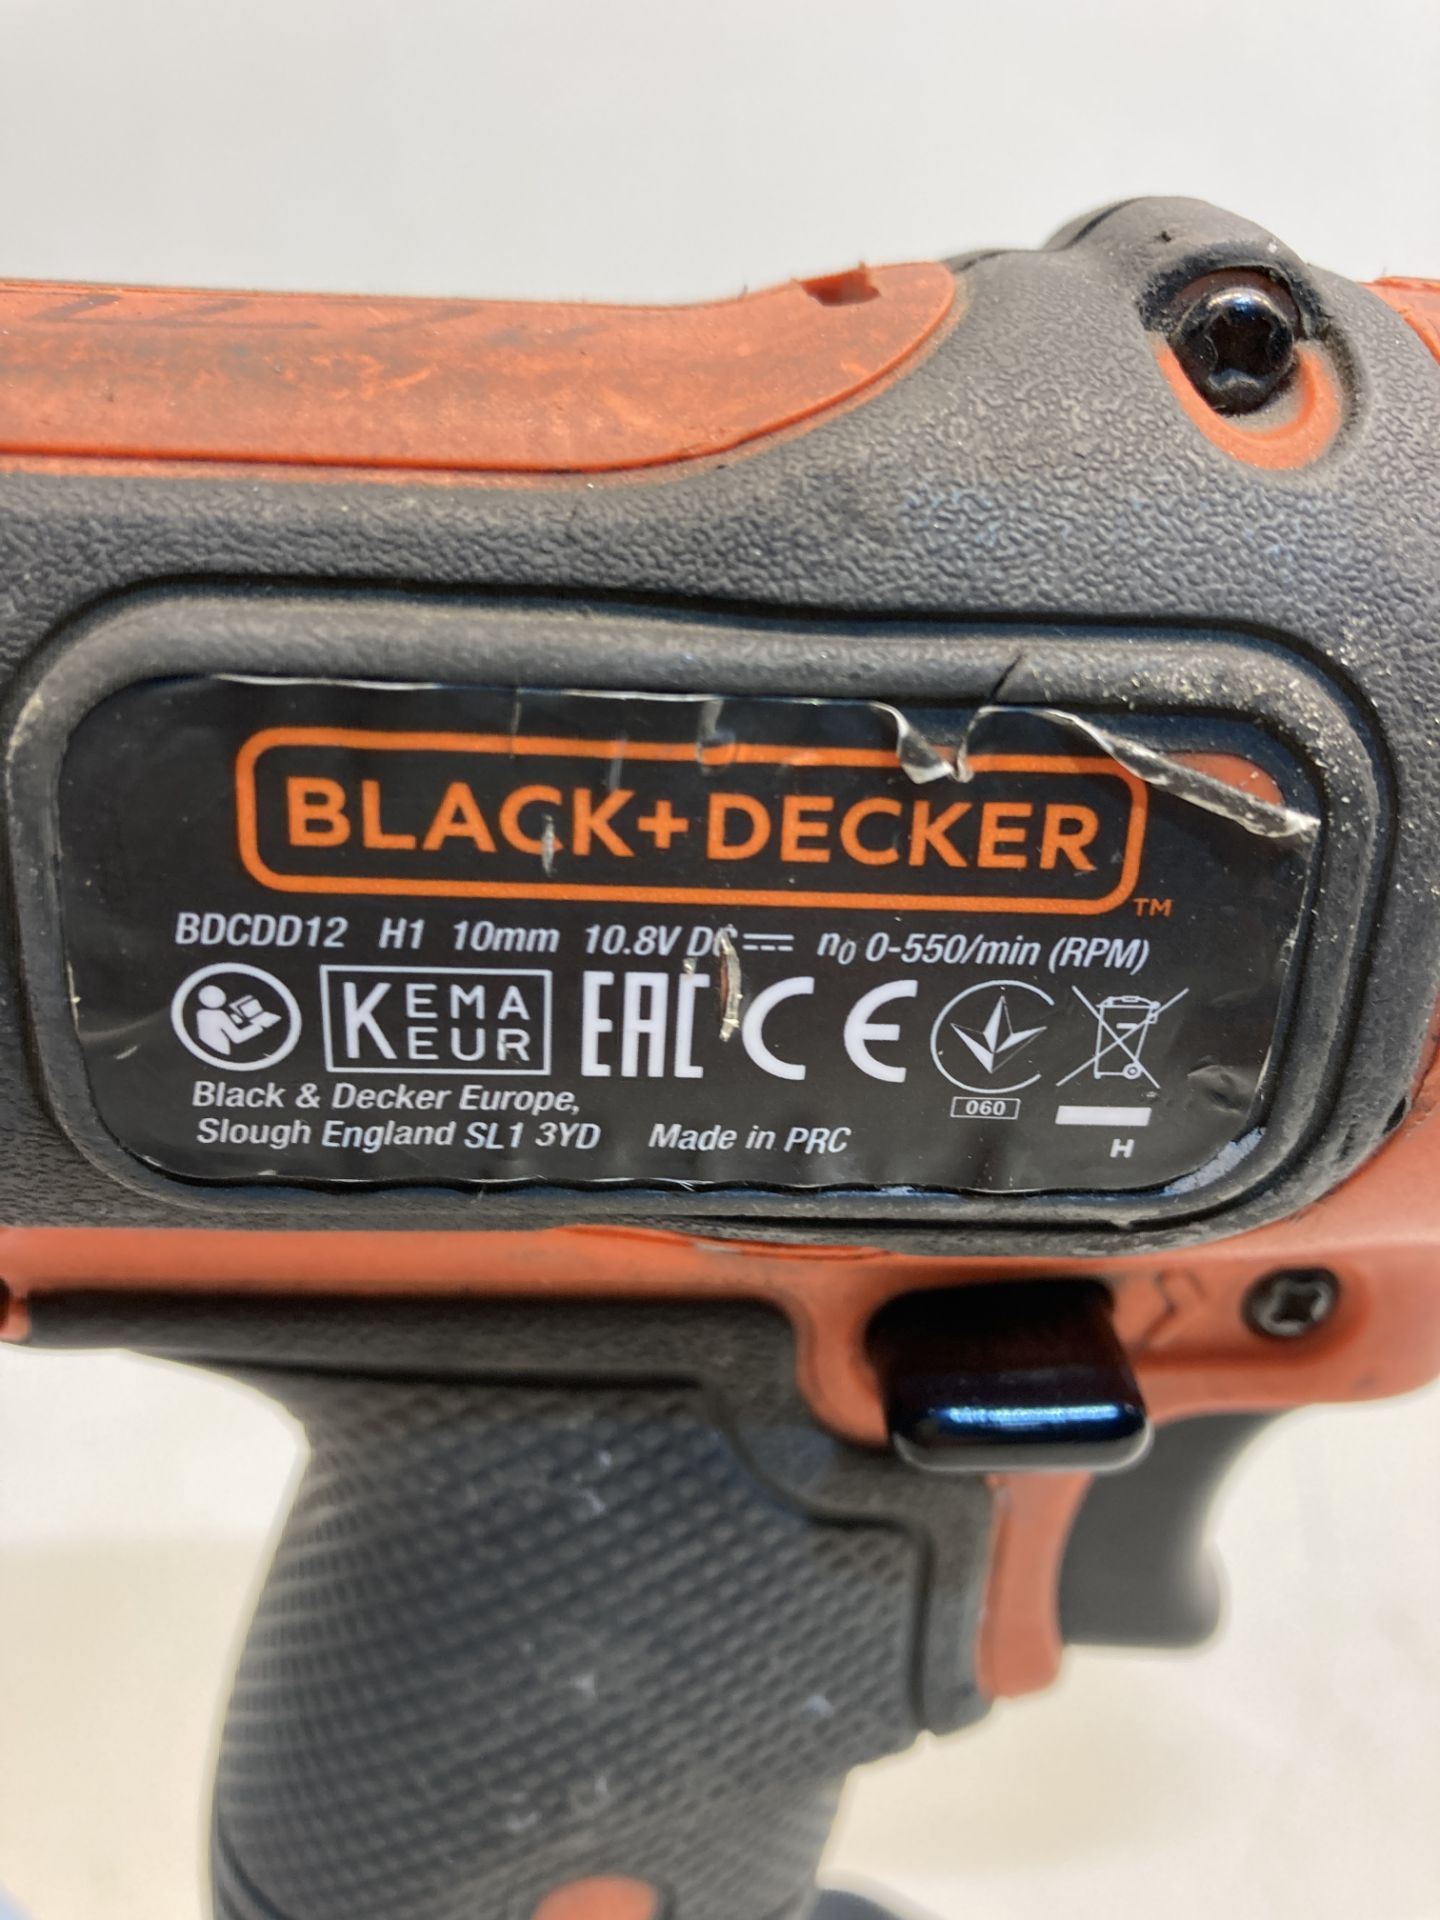 Black & Decker BDCDD12 Cordless Drill w/ Battery - Image 2 of 4